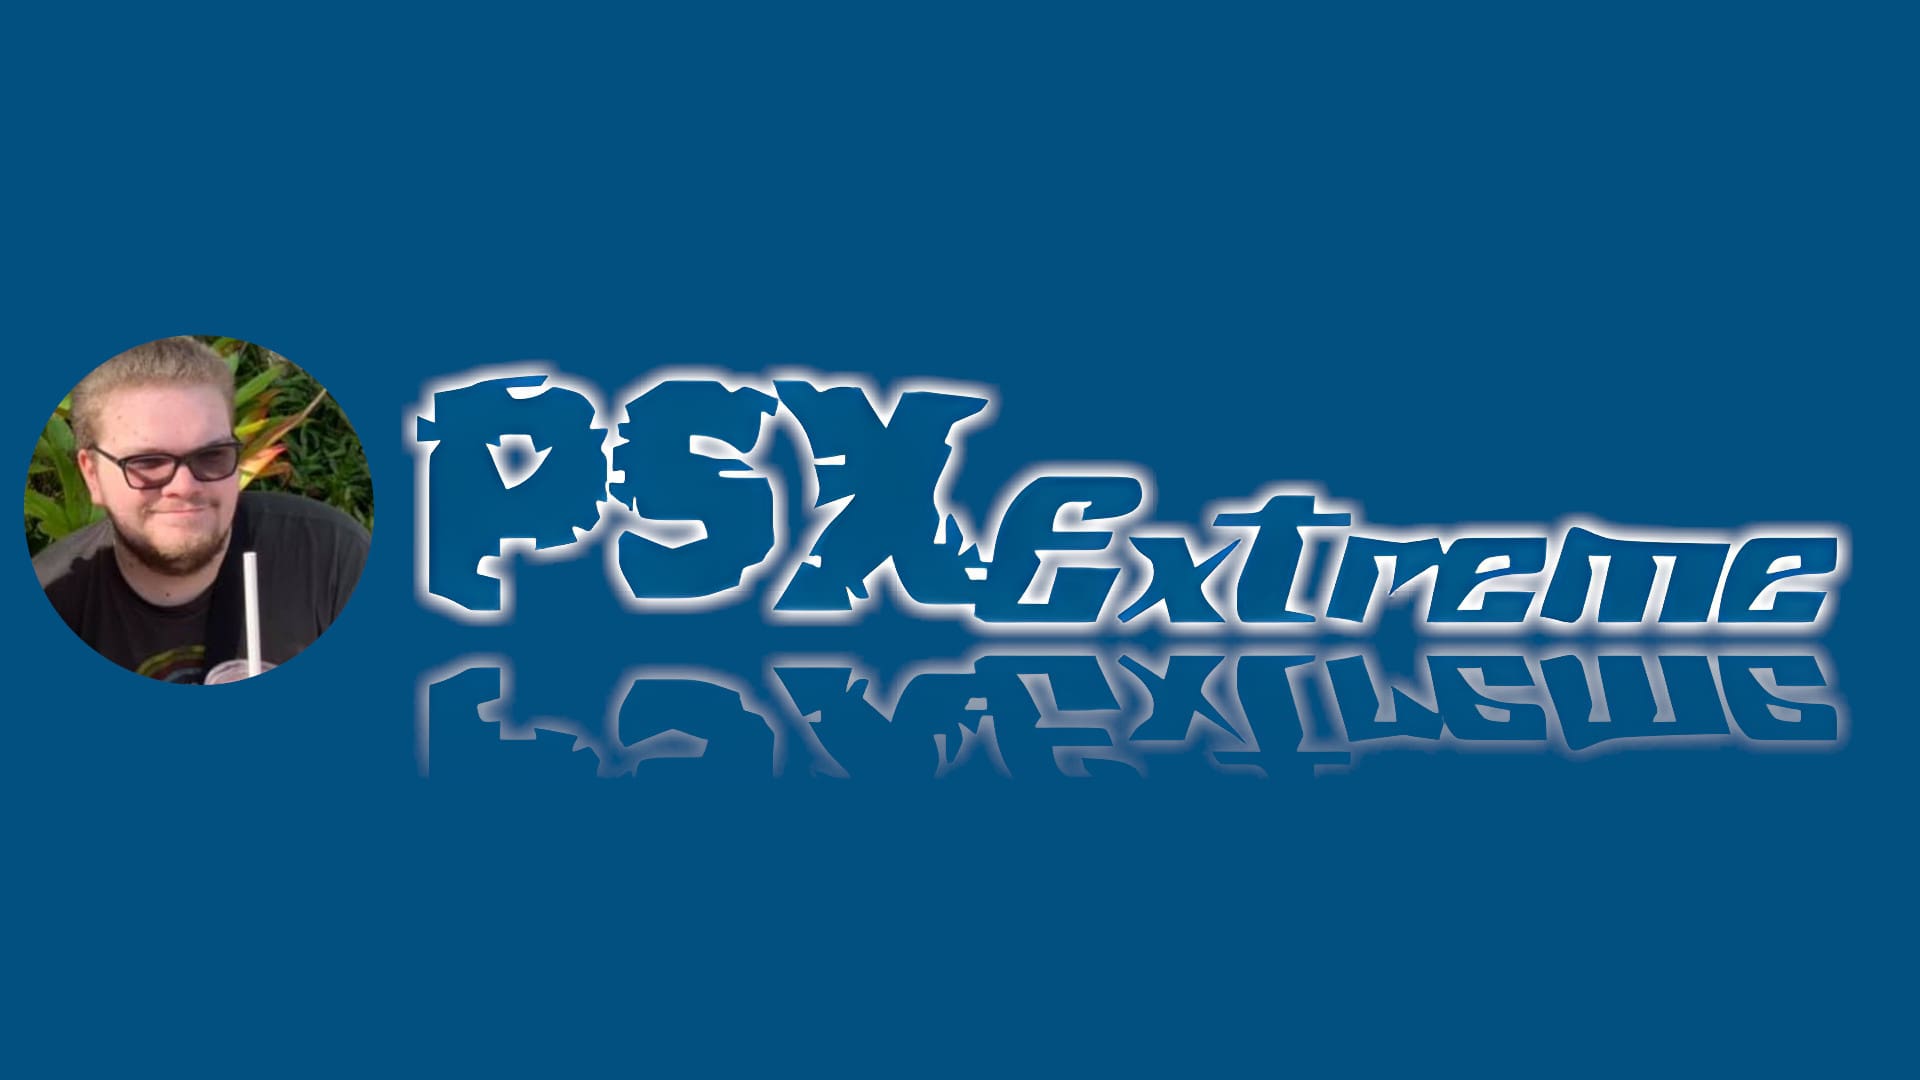 PSX Extreme